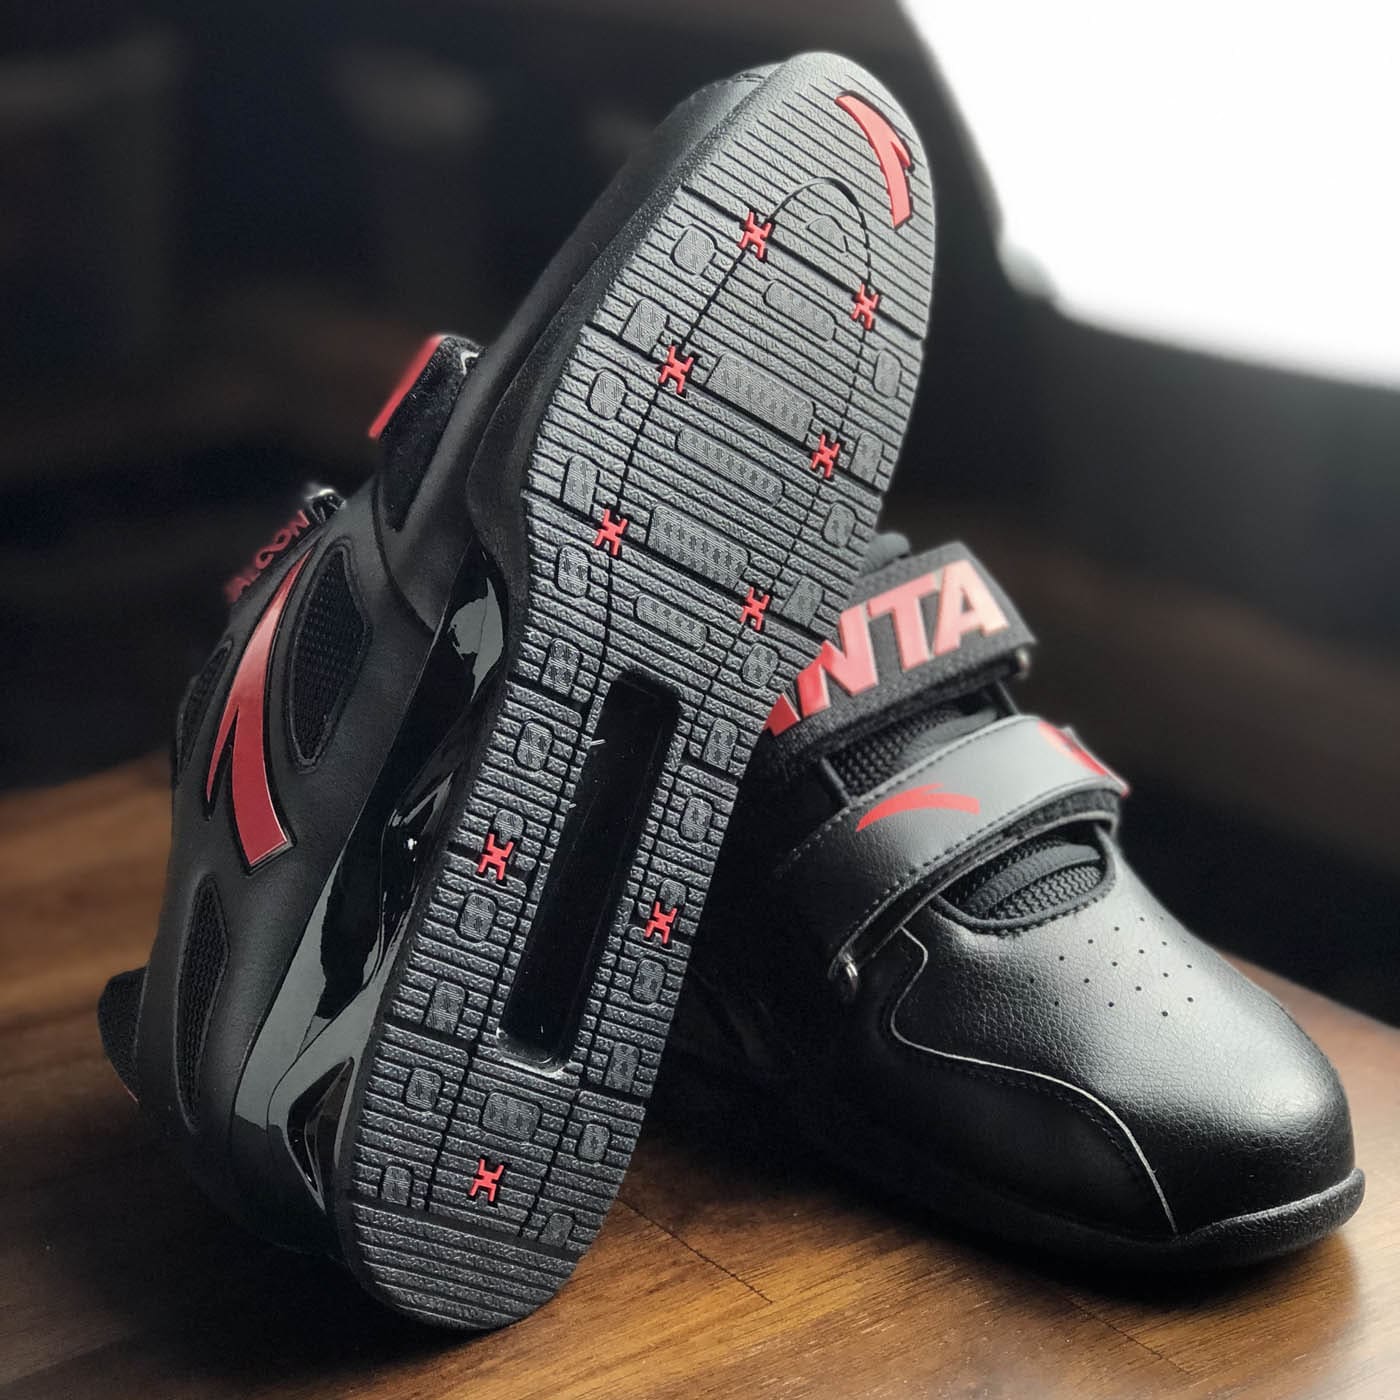 Anta Chinese Weightlifting Shoe Black/Red (no restock